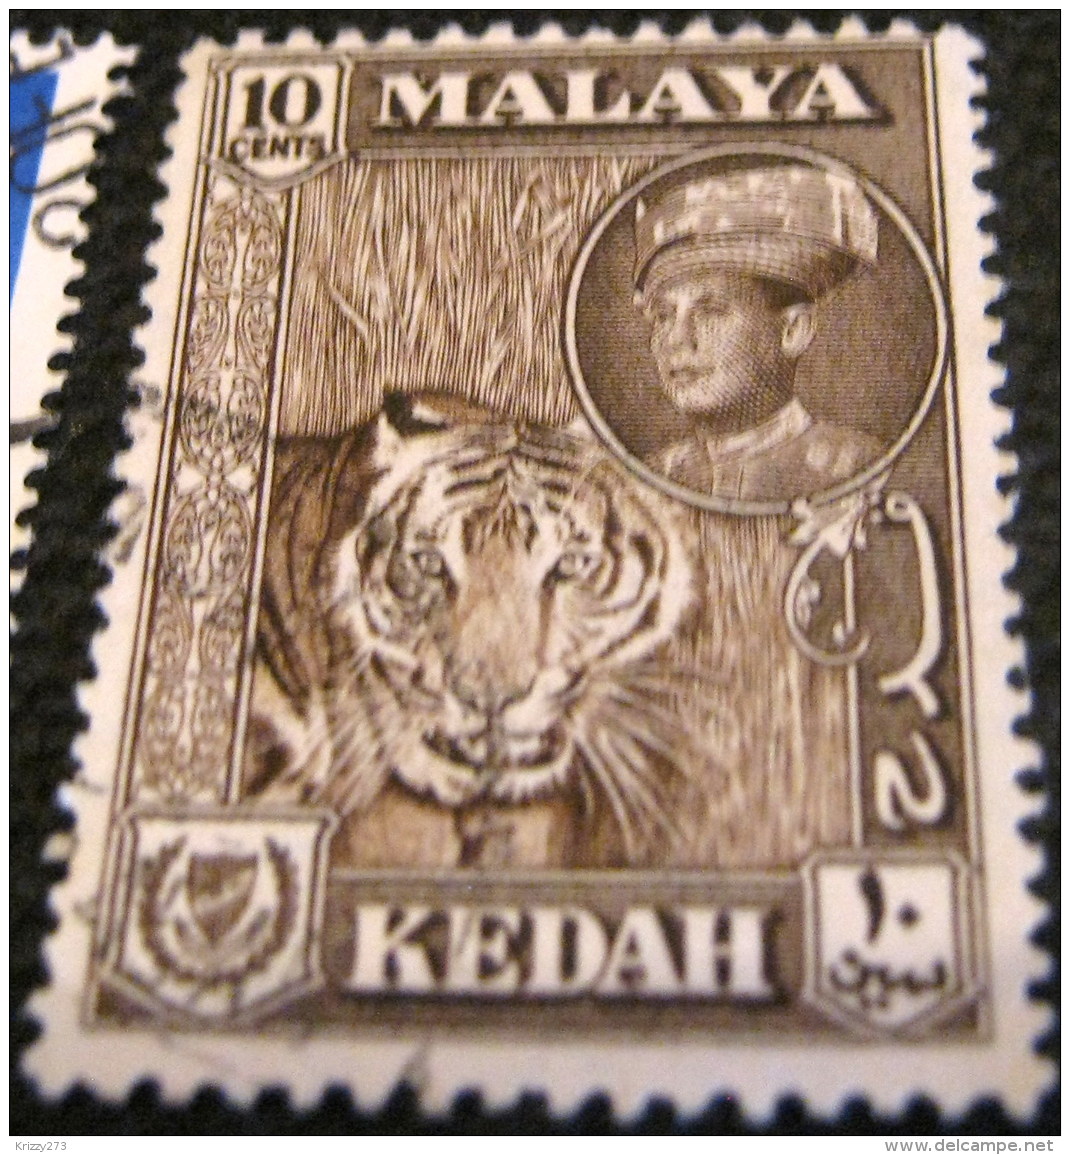 Kedah 1959 Sultan Abdul Tiger 10c - Used - Kedah